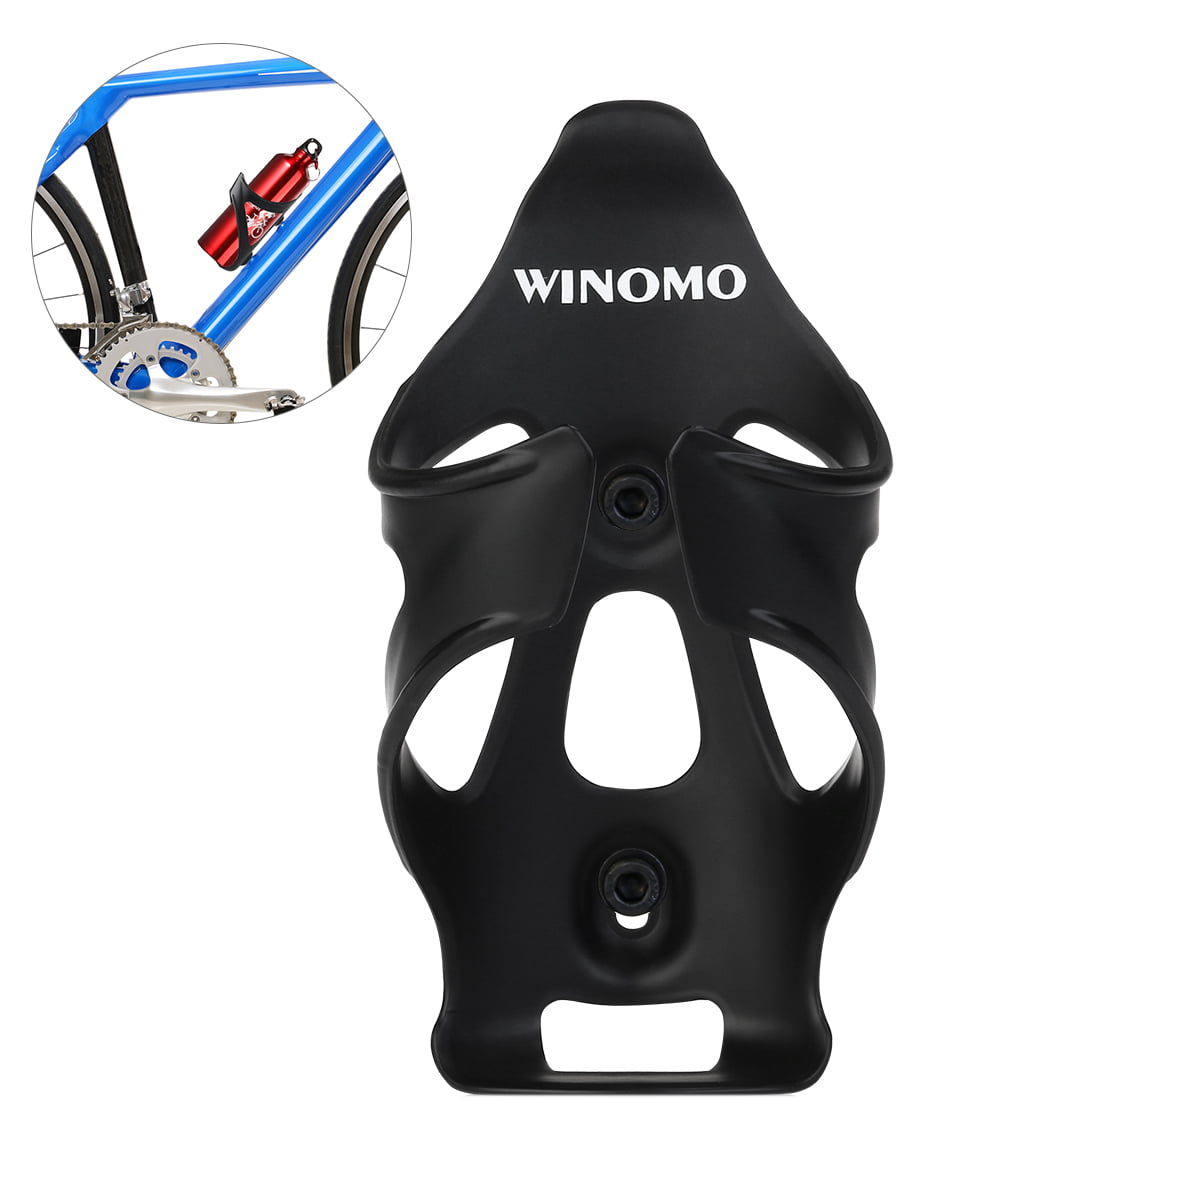 WINOMO Bicycle Nylon Fibre Cycling Bike Water Bottle Holder Cage Rack Black 